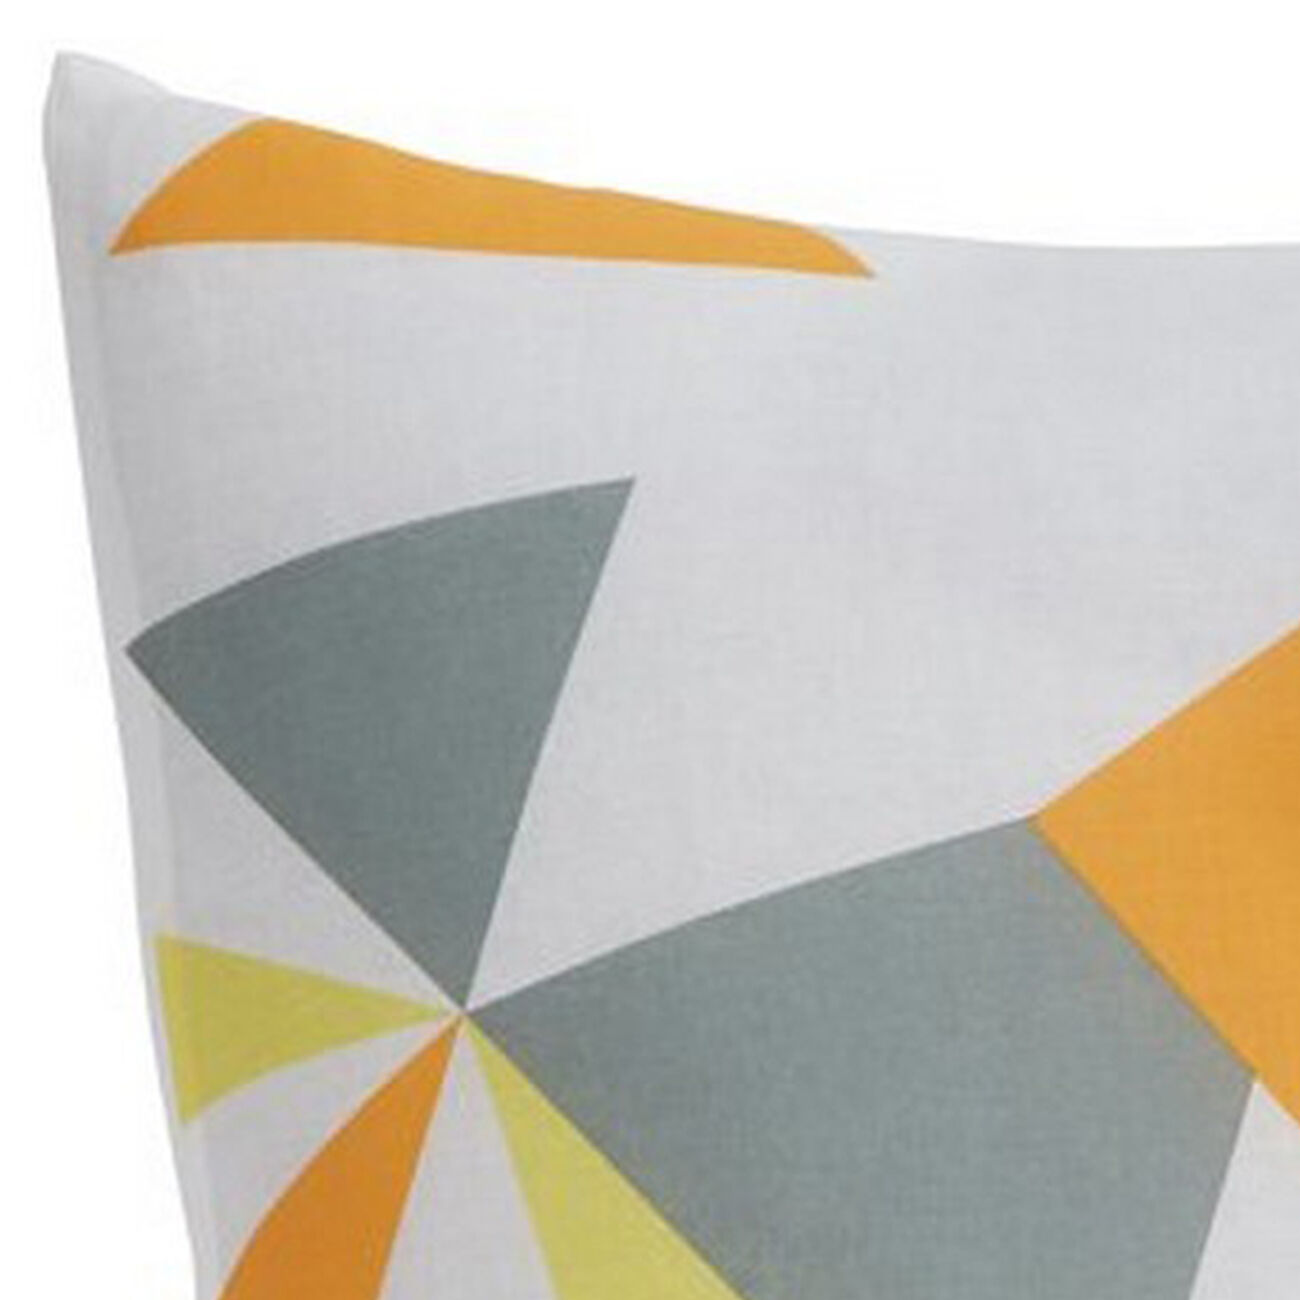 2 Piece Fabric Twin Comforter Set with Geometric Print, Multicolor